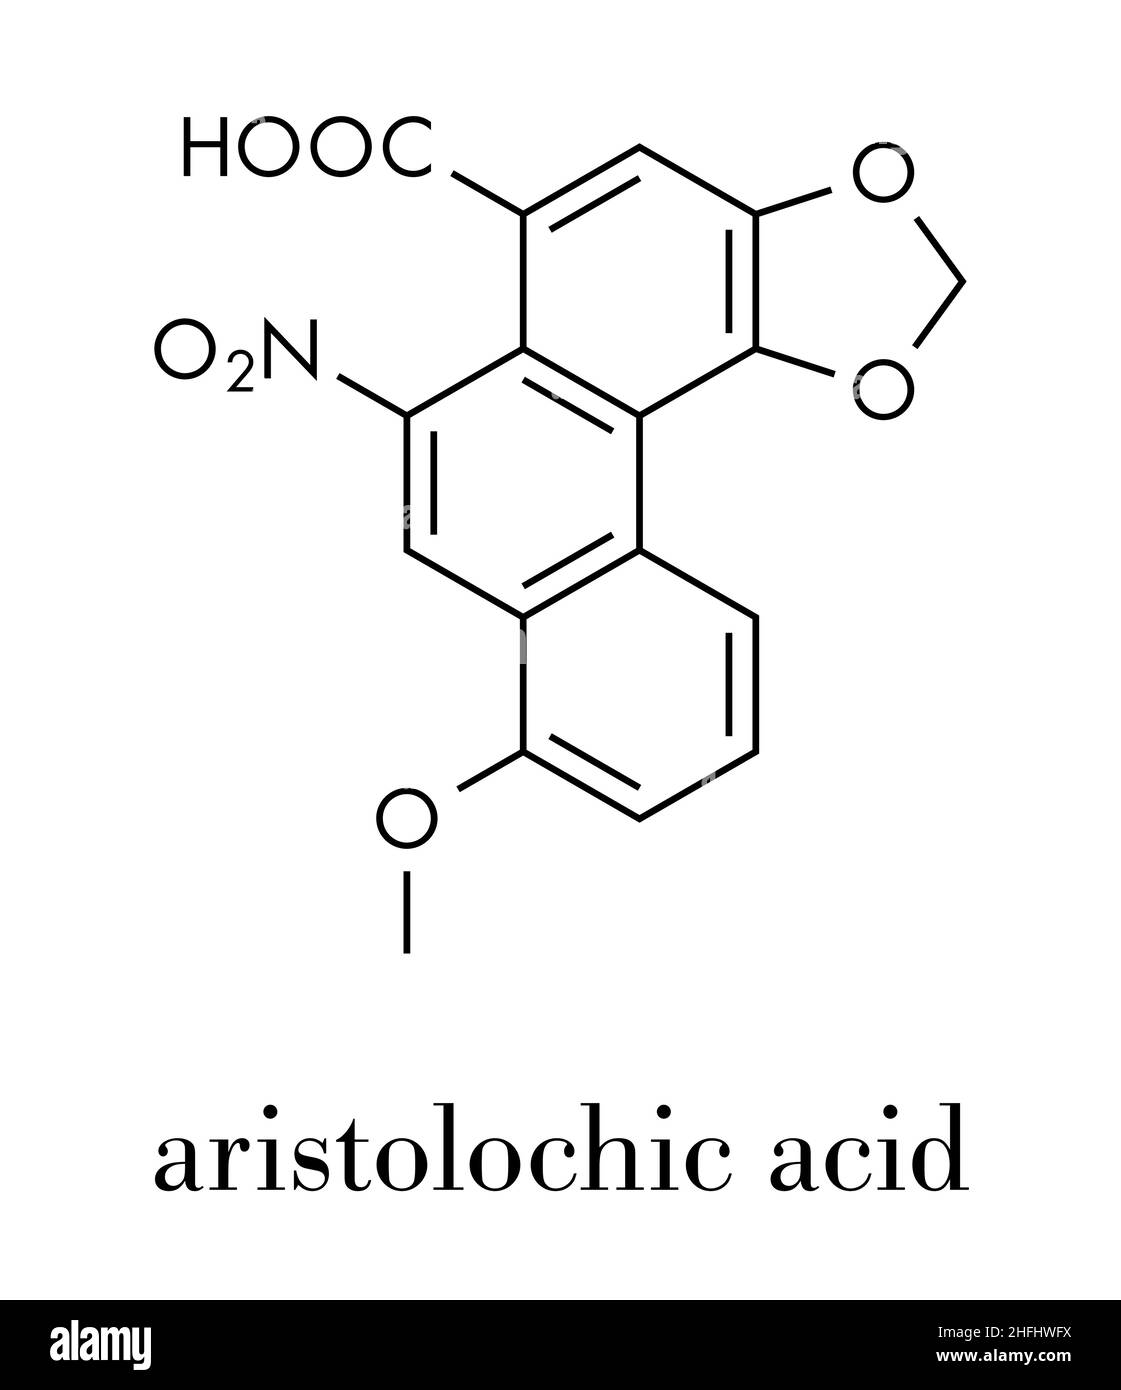 Aristolochic acid plant poison molecule. Has carcinogenic and nephrotoxic (kidney damaging) properties. Found in Aristolochia and Asarum herbs, often Stock Vector